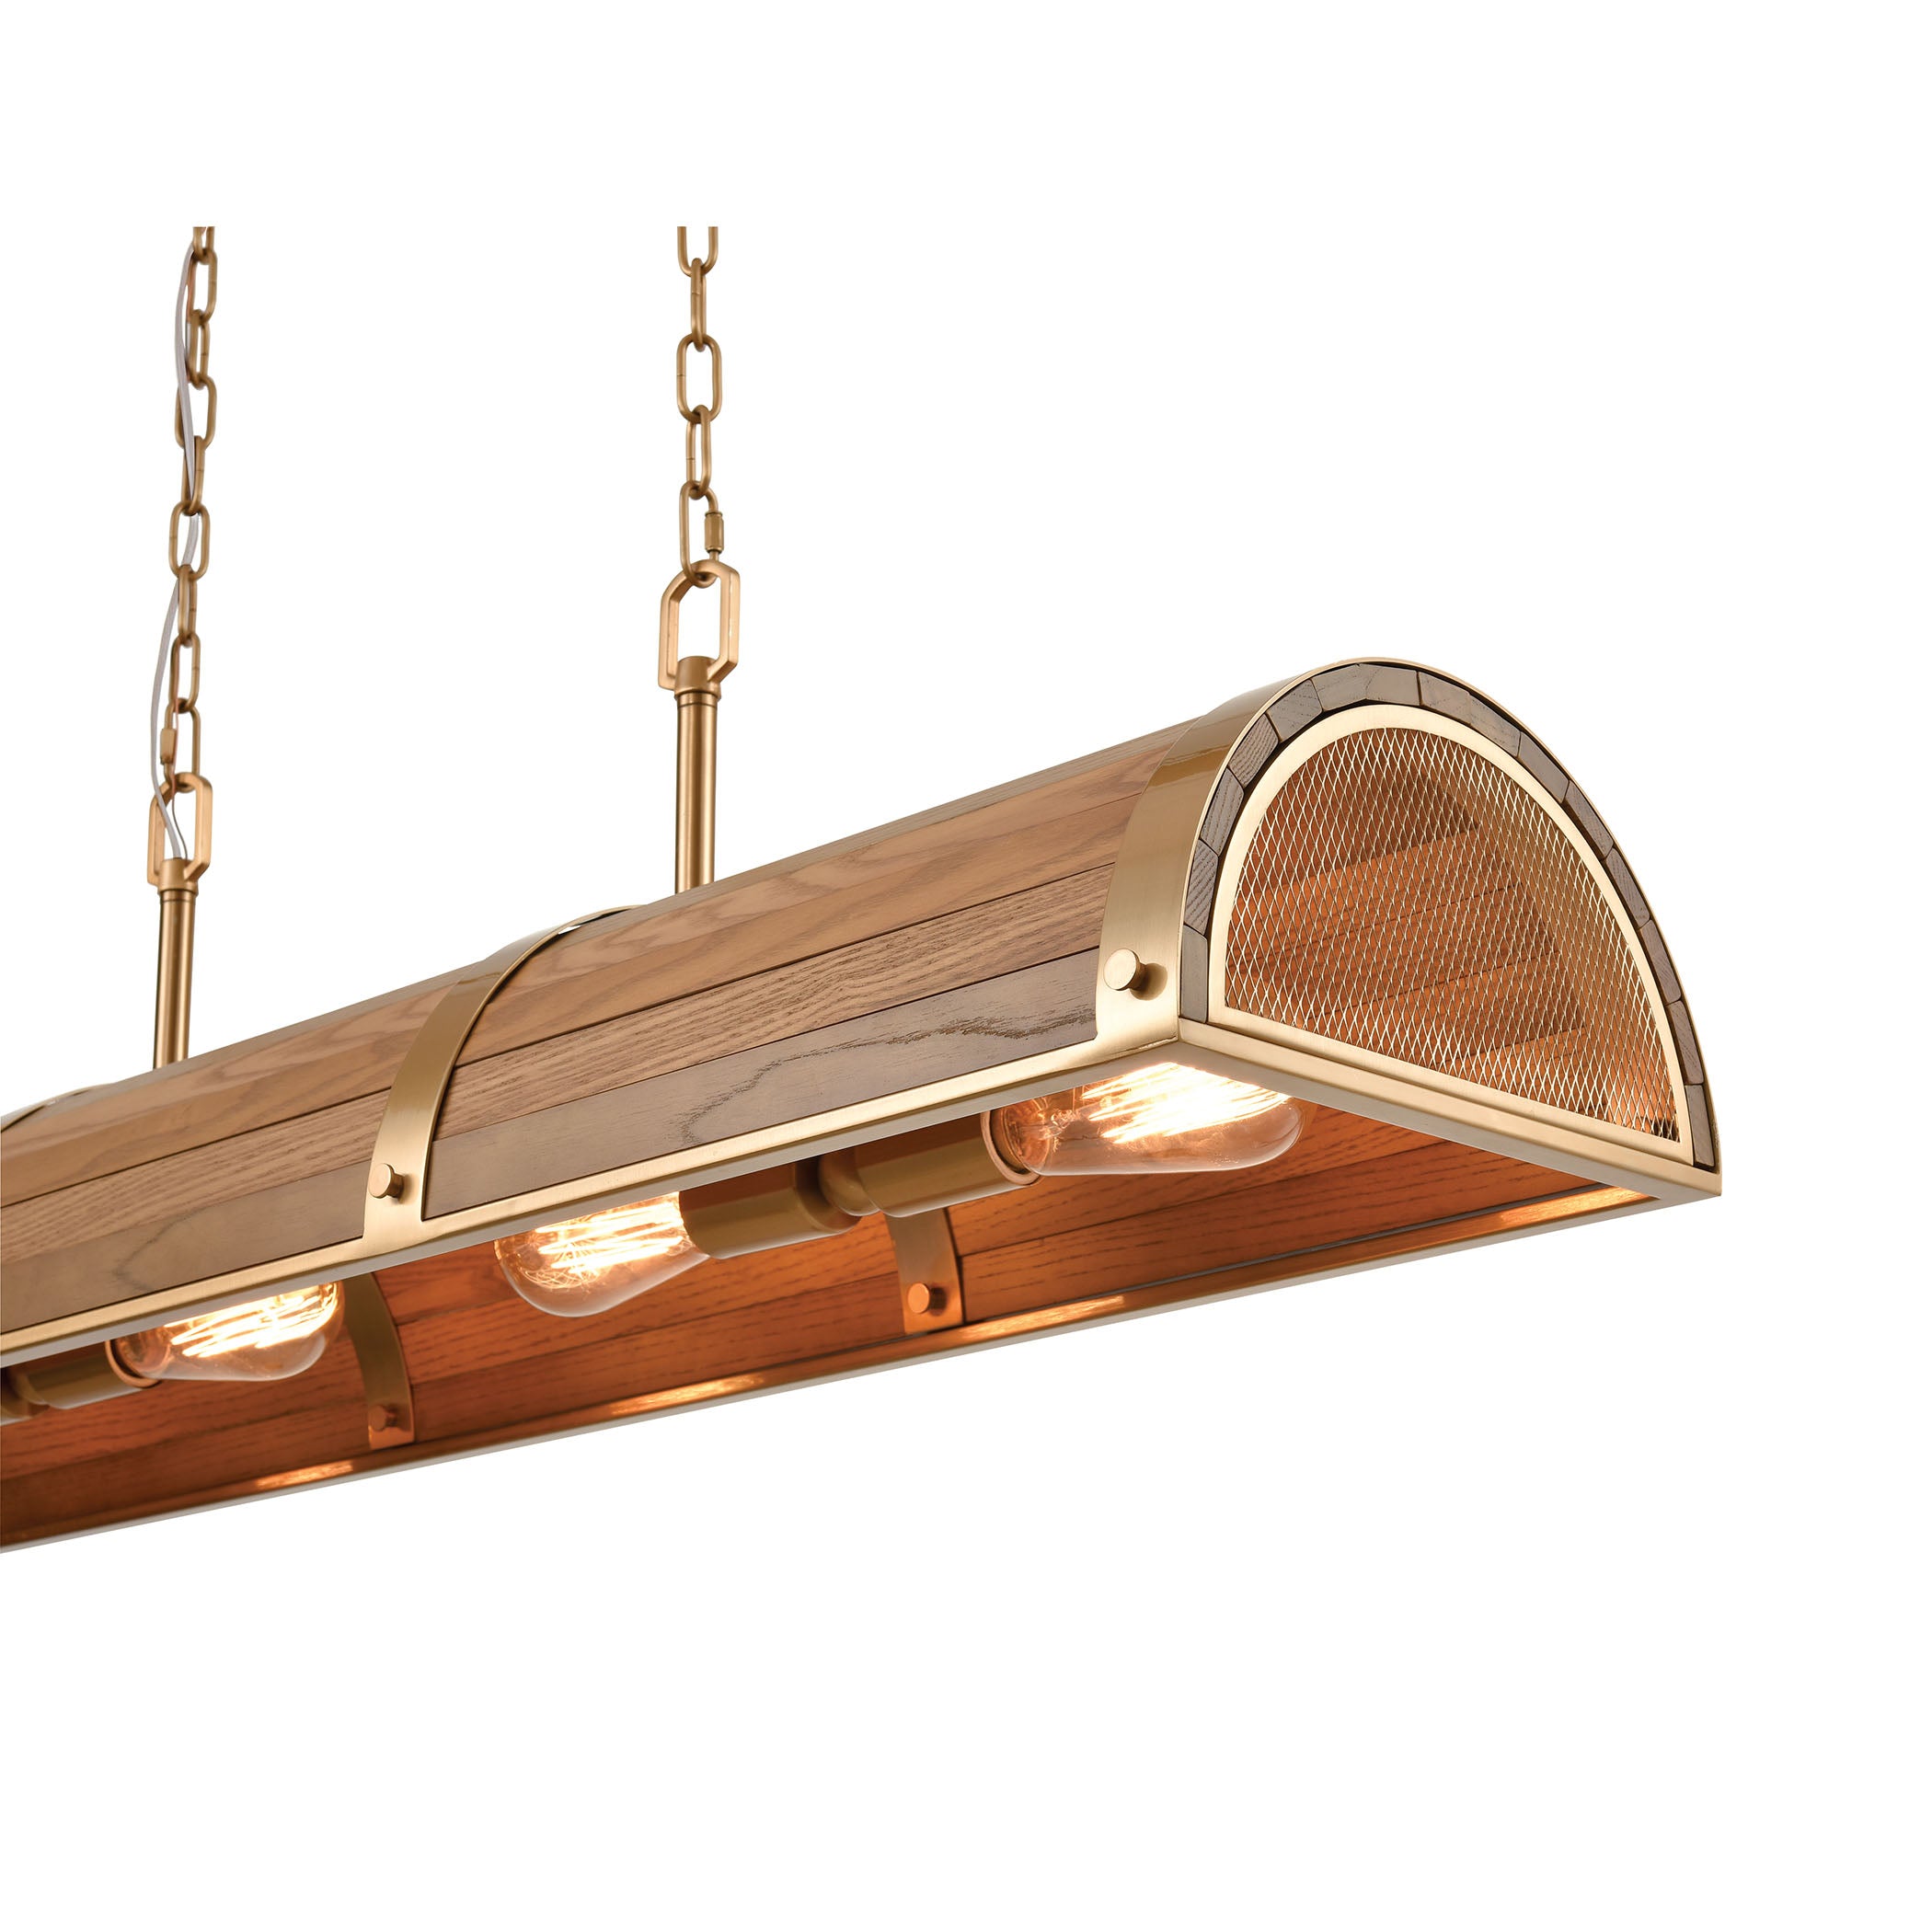 ELK Lighting 33375/4 Wooden Barrel 4-Light Island Light in Satin Brass with Slatted Wood Shade in Medium Oak